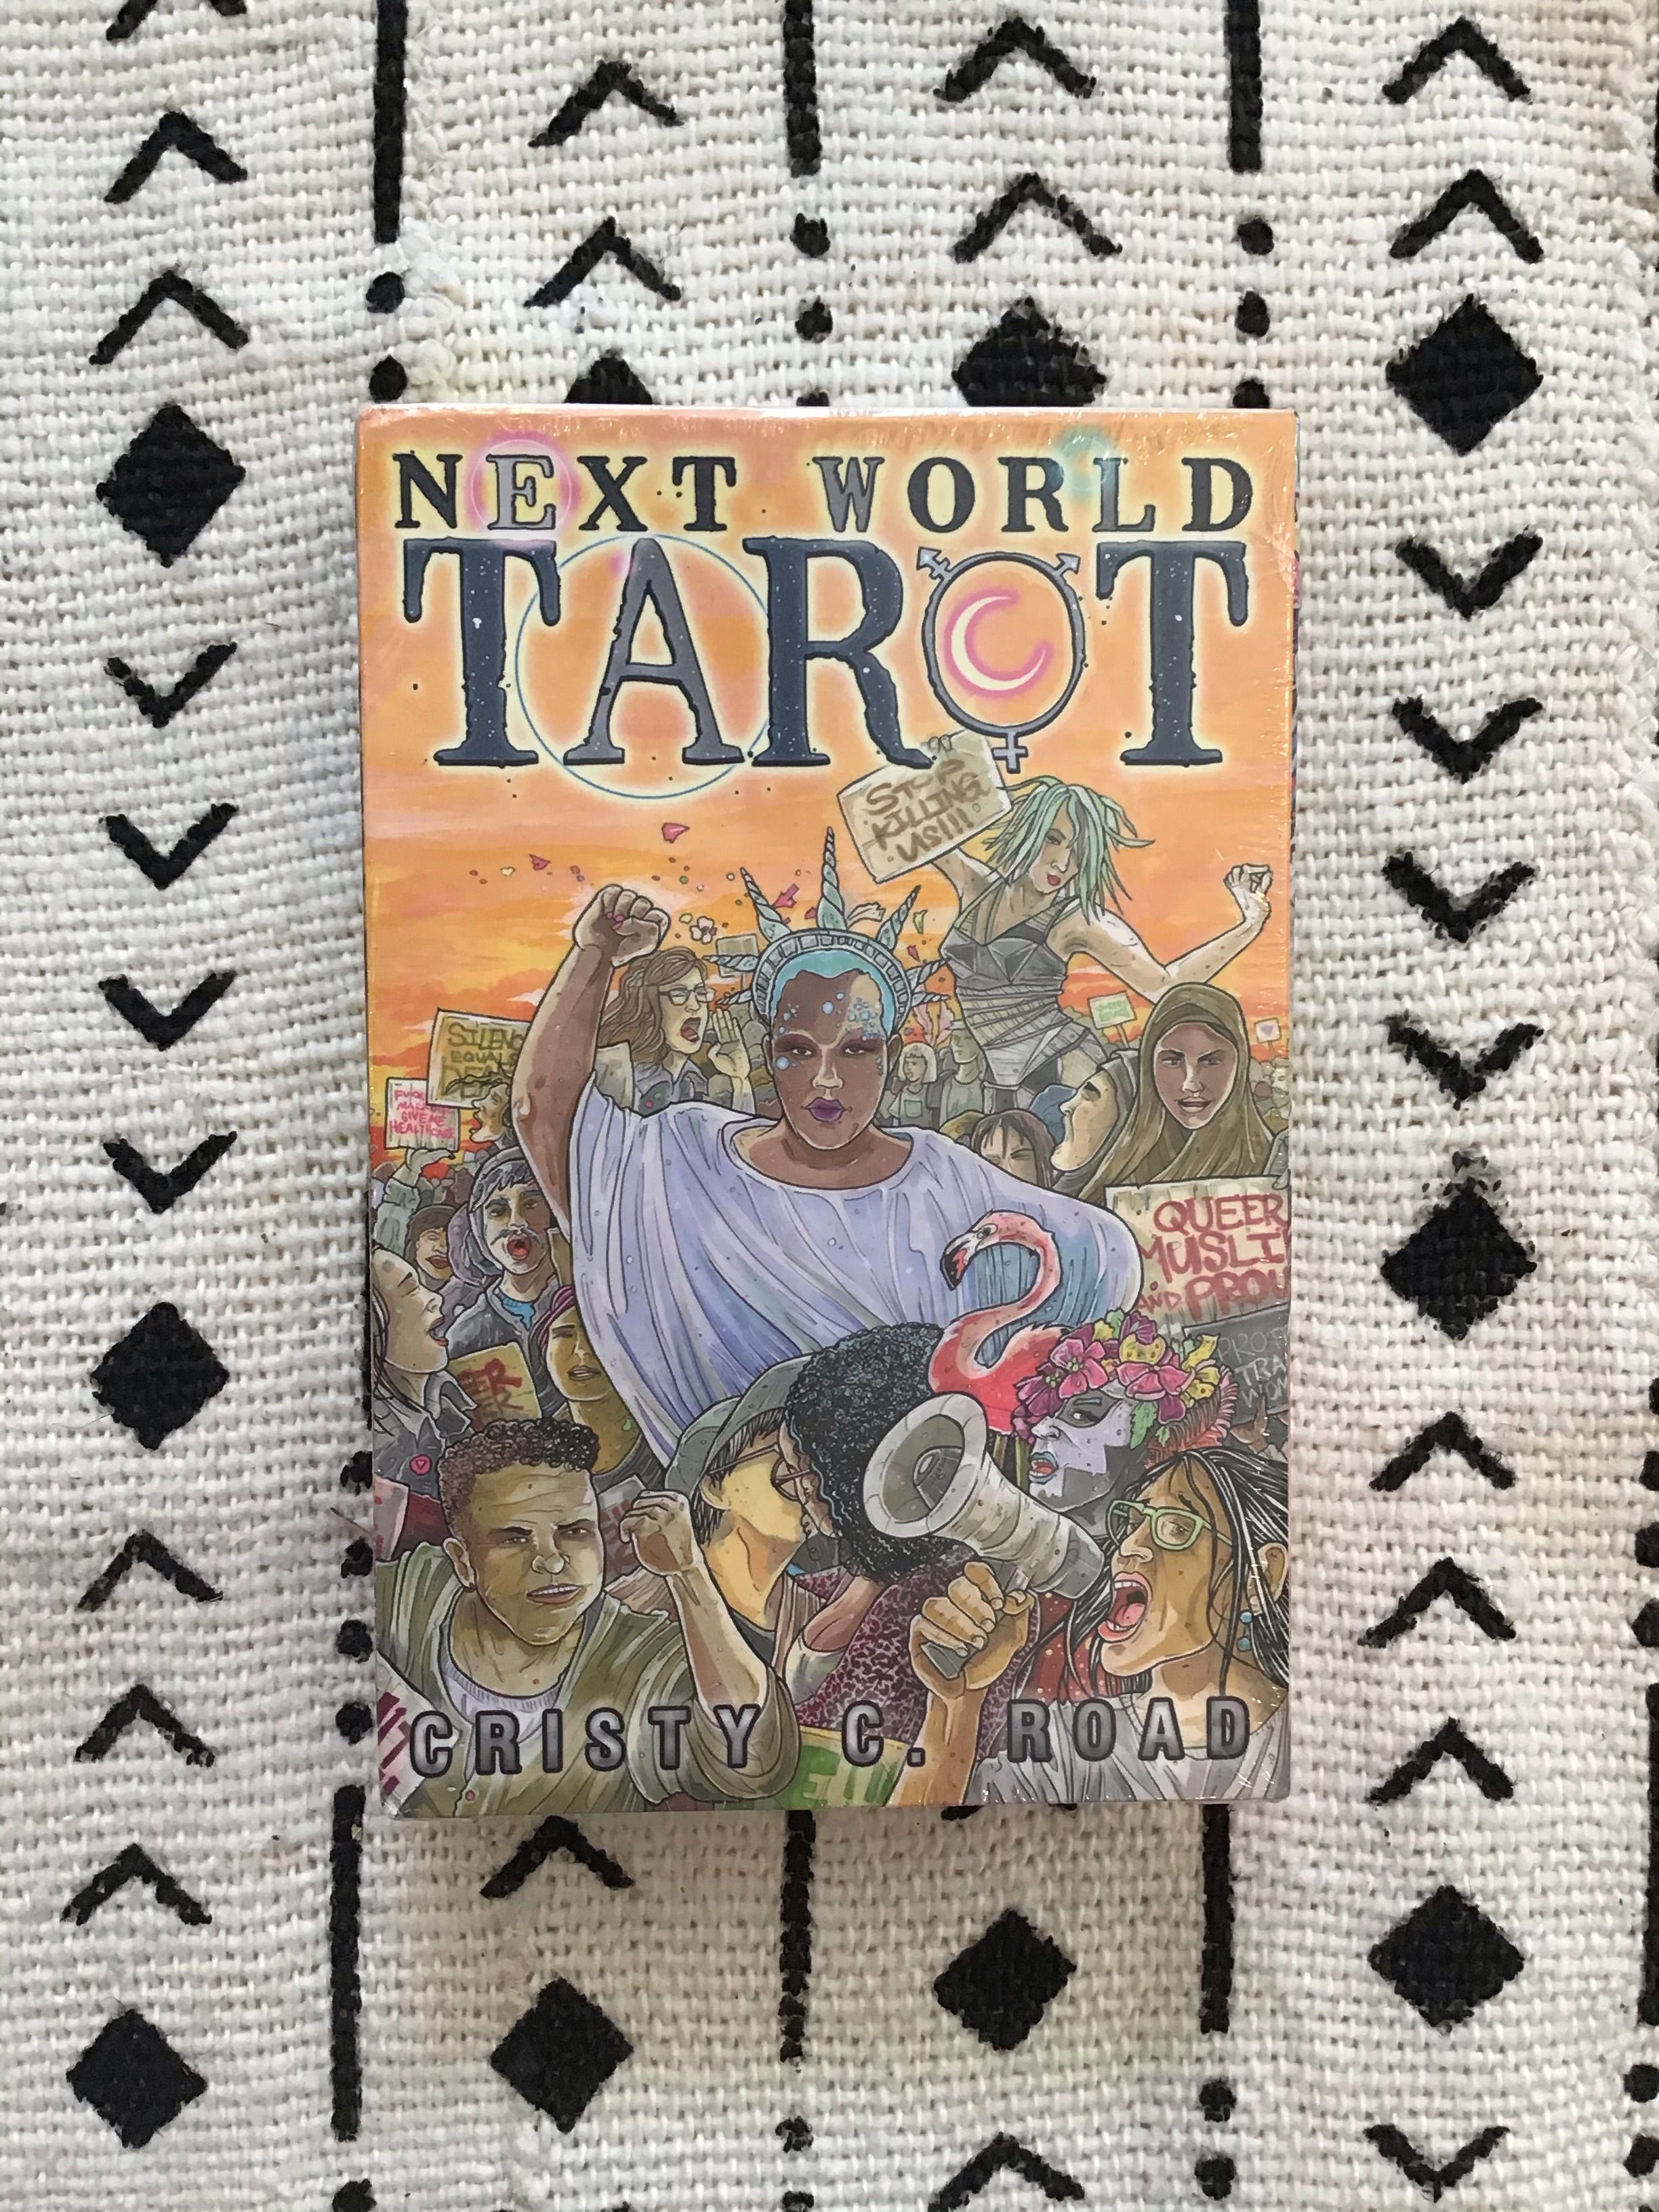 Next World Tarot by Cristy C. Road.